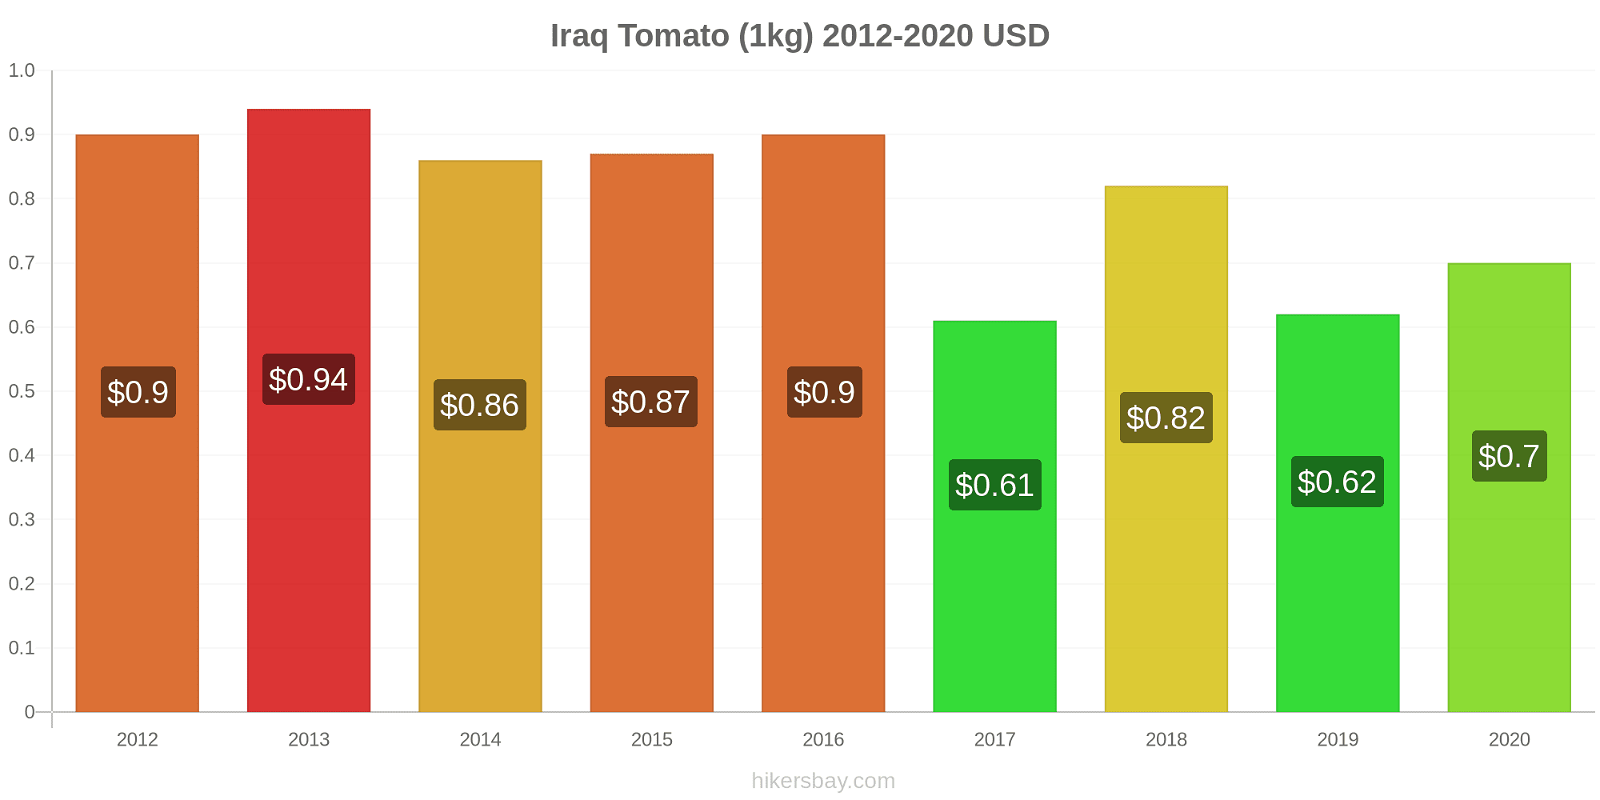 Iraq price changes Tomato (1kg) hikersbay.com